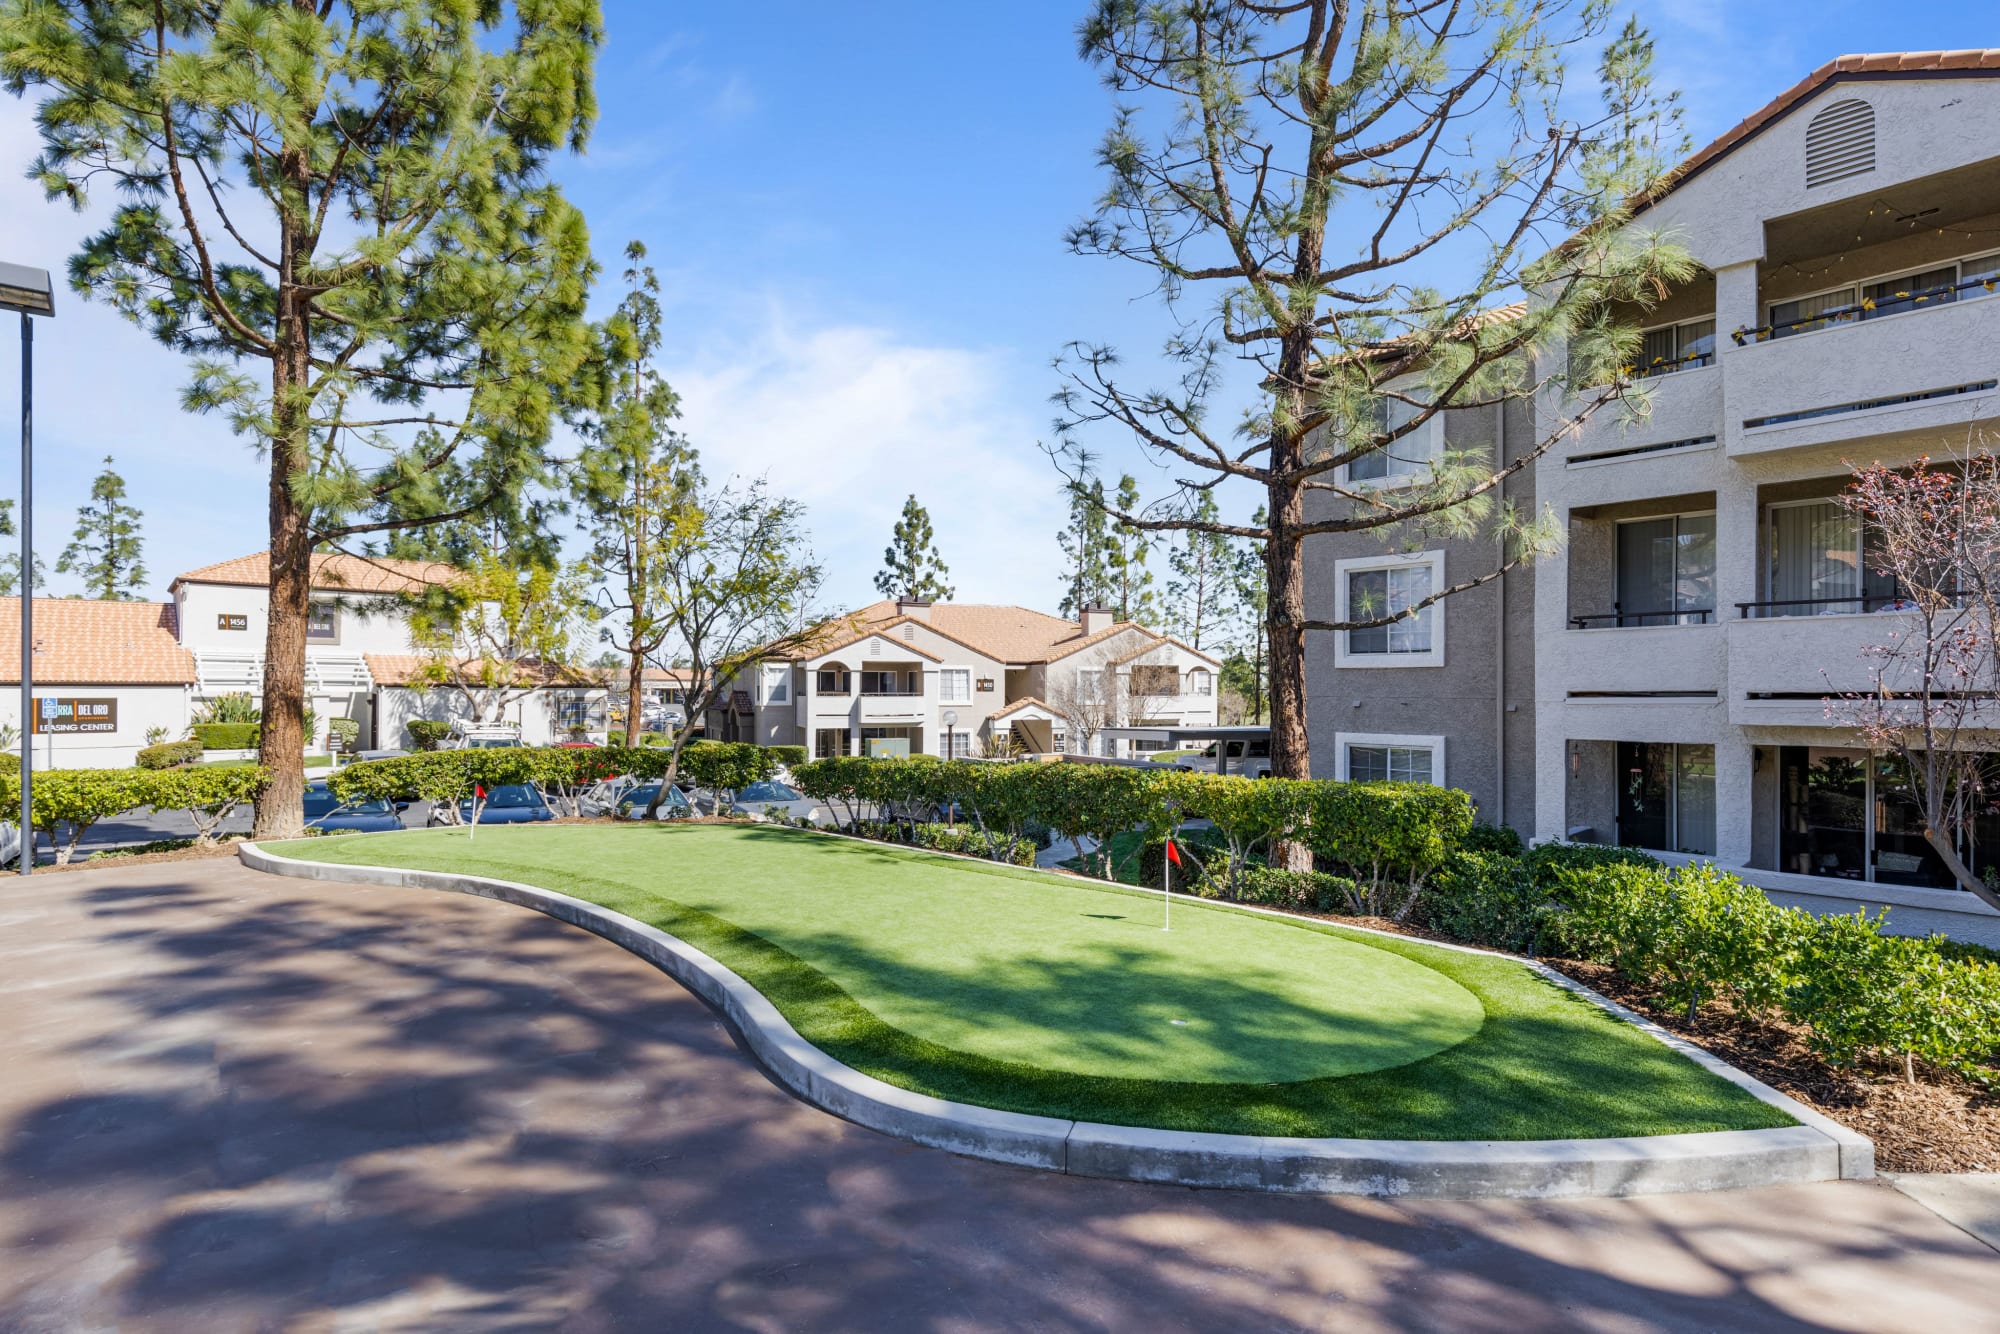 Putting green area at Sierra Del Oro Apartments in Corona, California